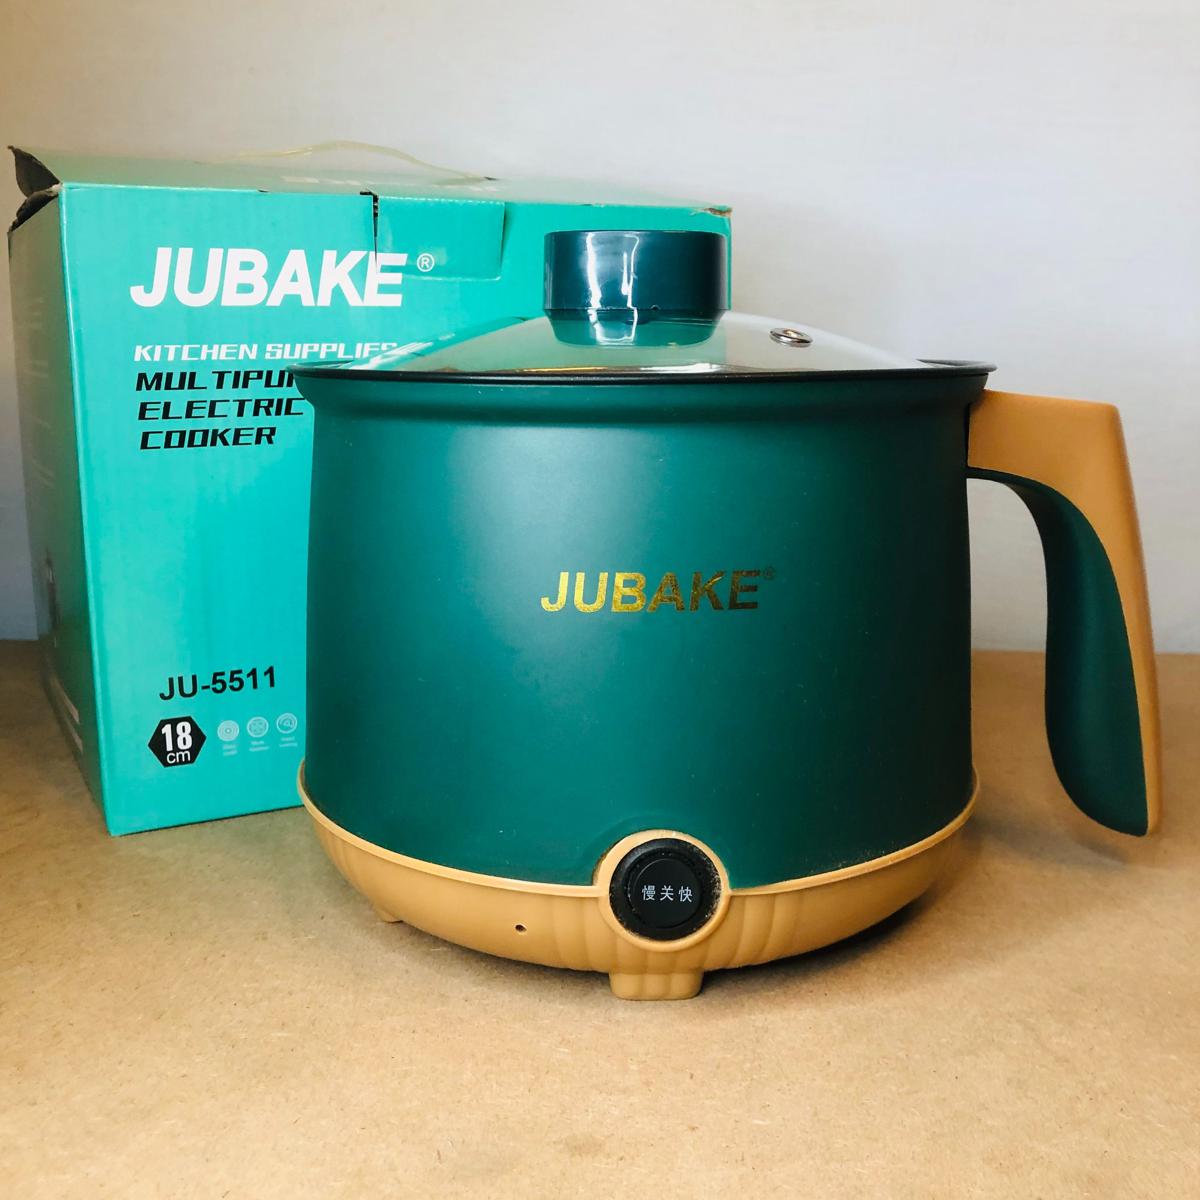 Jubake Multifunctional Electric Cooker Price in Pakistan